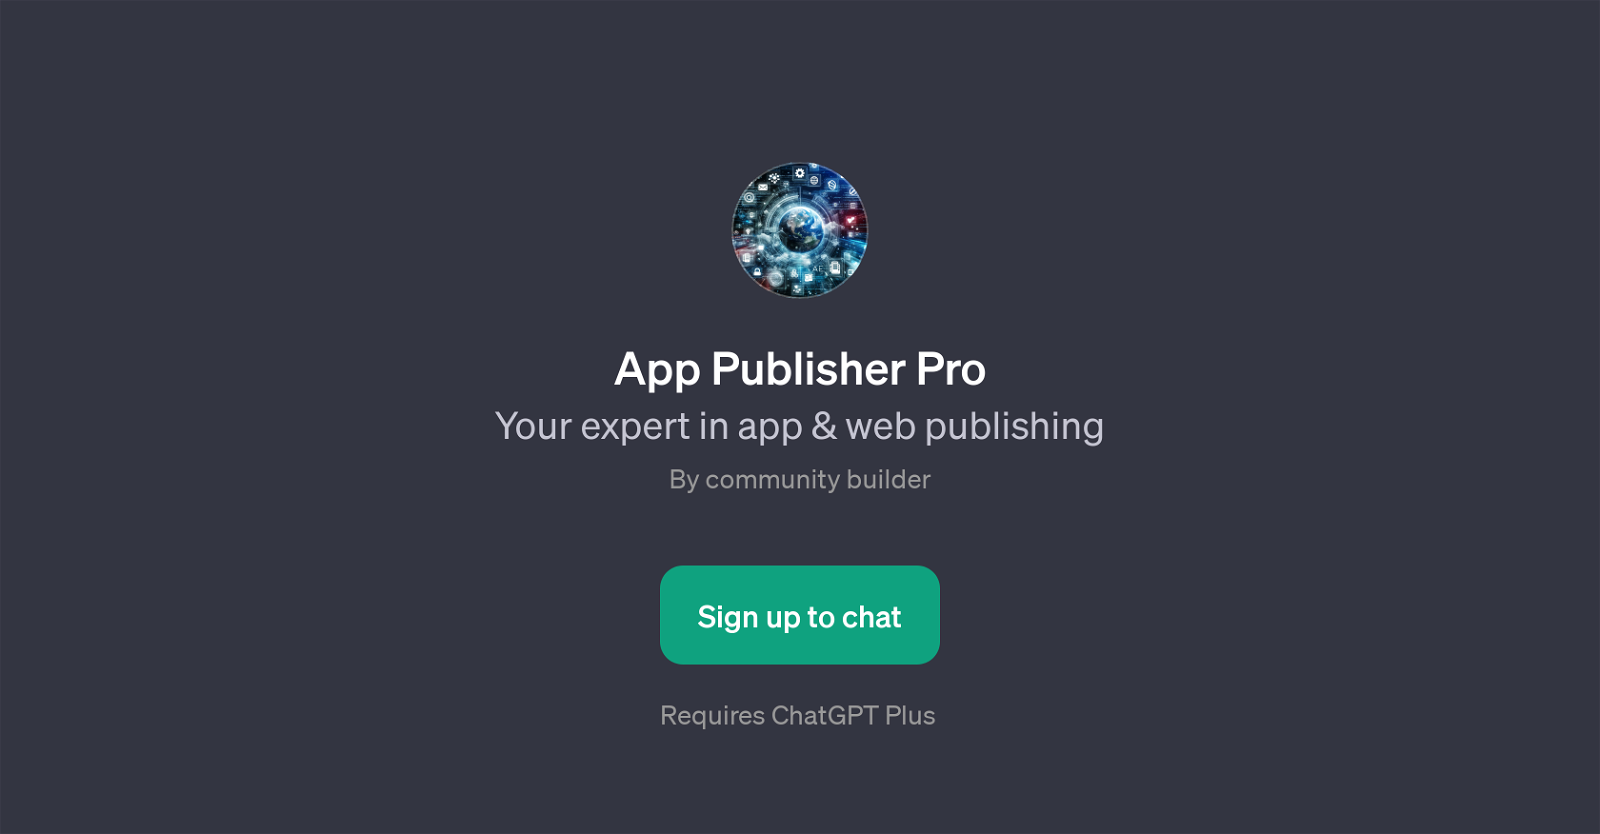 App Publisher Pro website